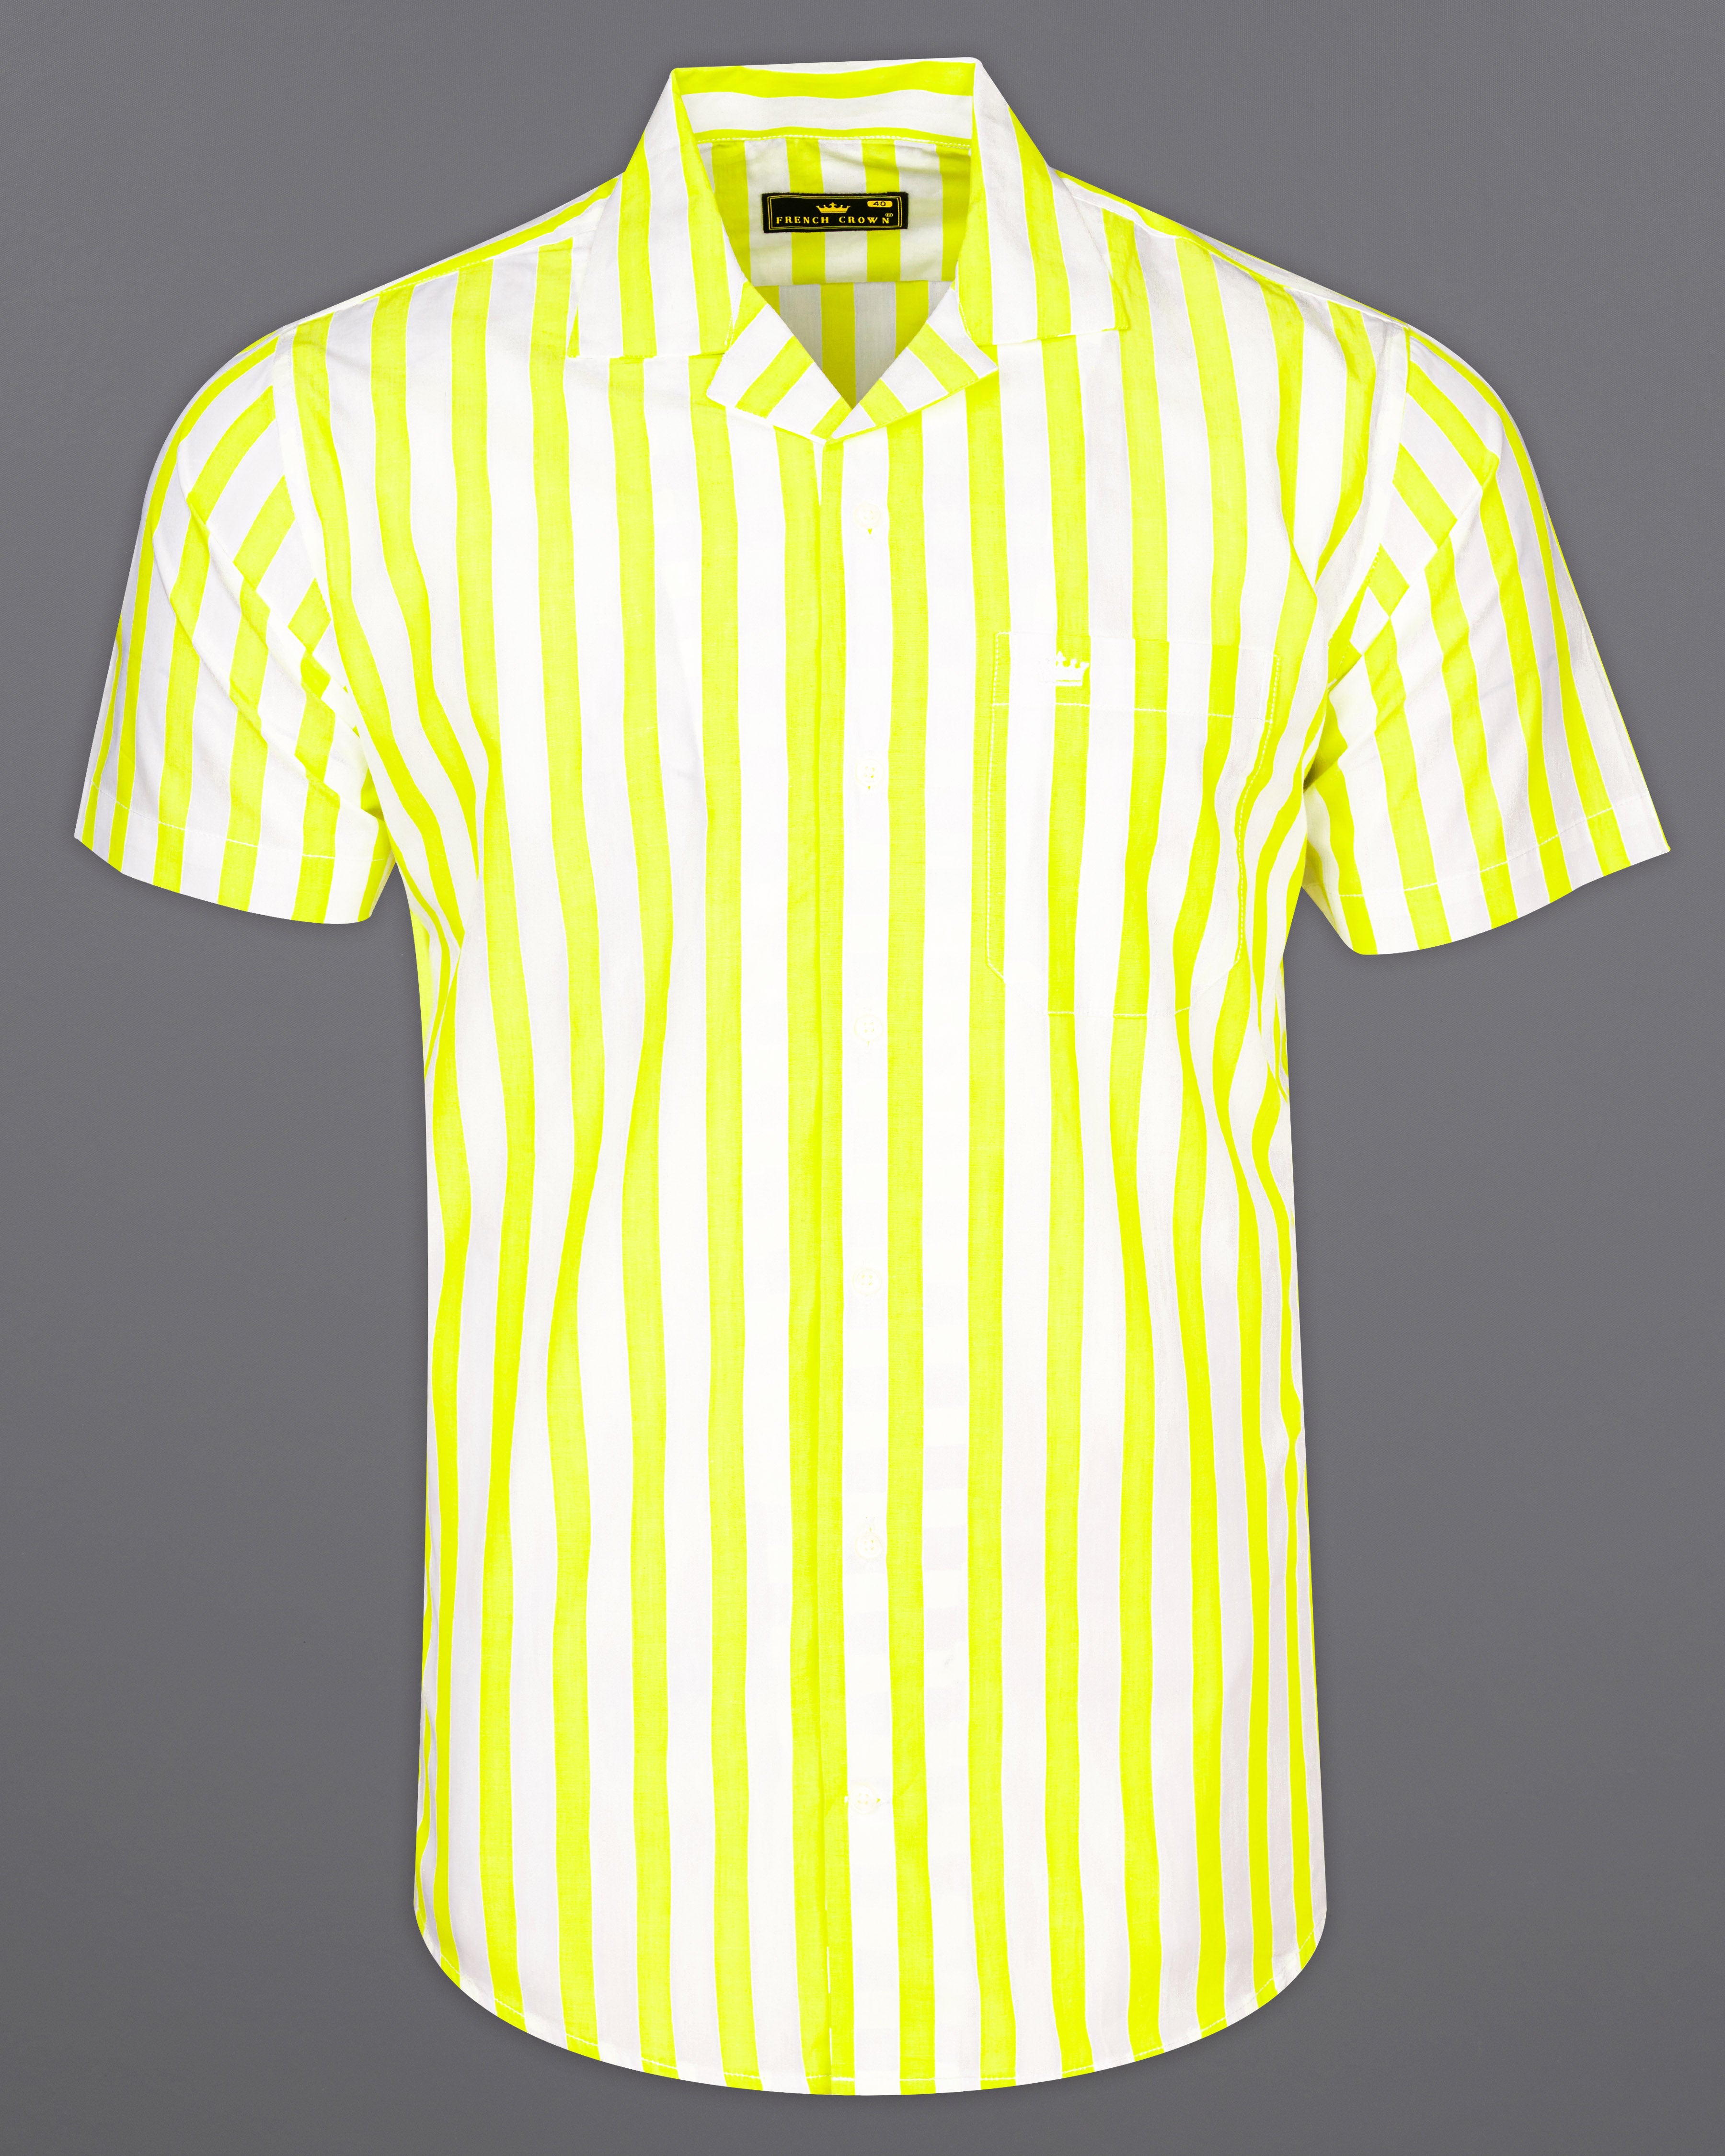 Custard Neon Yellow with White Striped Half-Sleeved Premium Cotton Shirt 9717-CC-SS-38, 9717-CC-SS-39, 9717-CC-SS-40, 9717-CC-SS-42, 9717-CC-SS-44, 9717-CC-SS-46, 9717-CC-SS-48, 9717-CC-SS-50, 9717-CC-SS-52